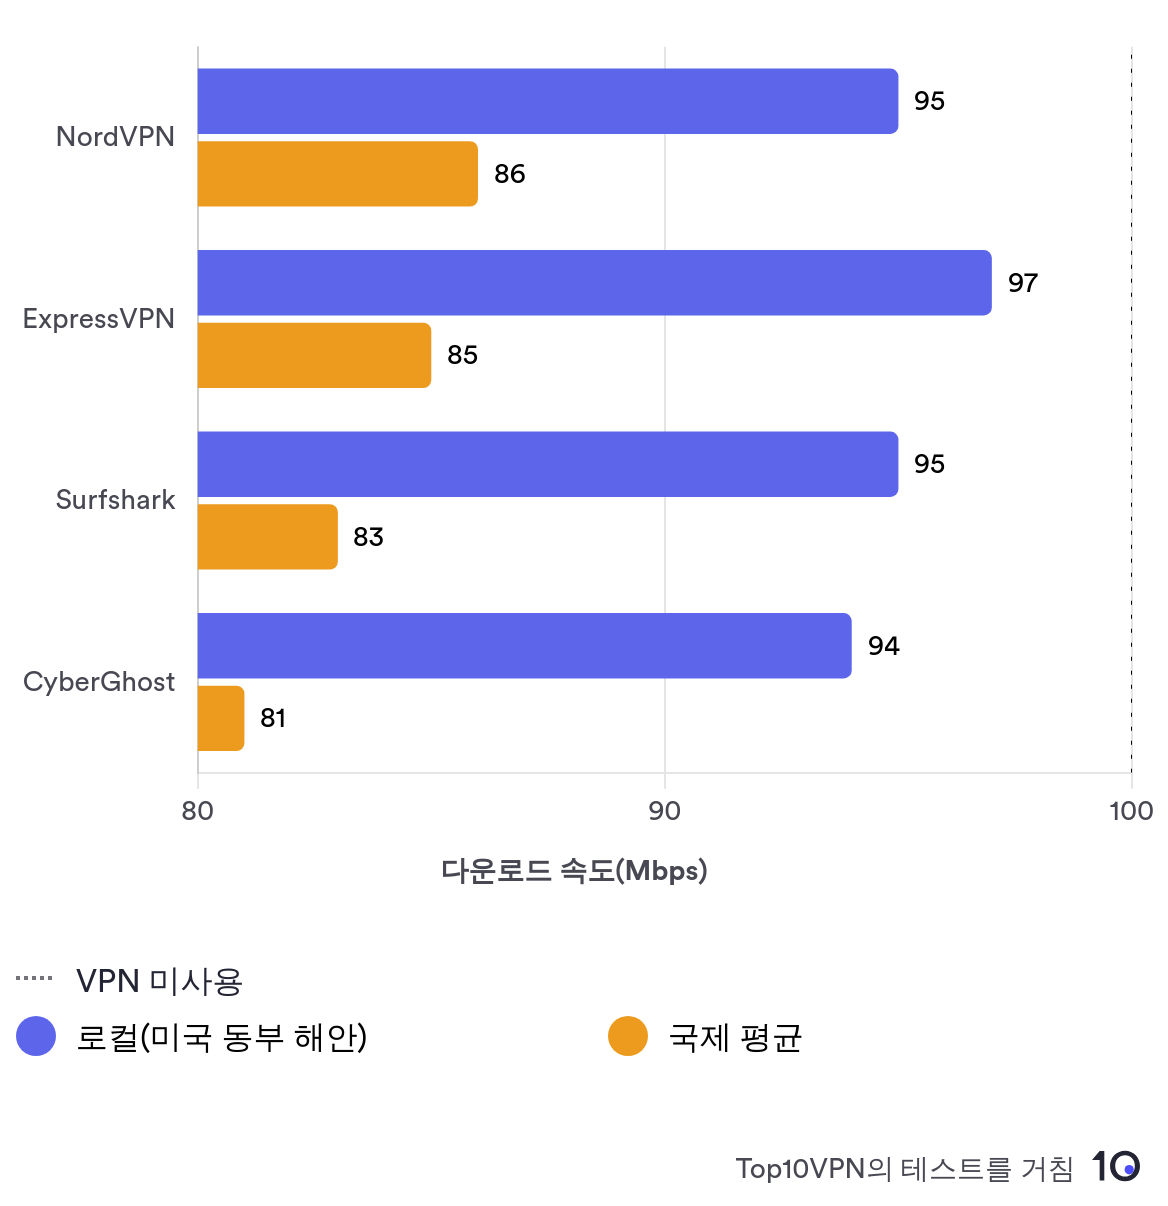 NordVPN와 다른 상위 VPN의 로컬 및 해외 평균 연결 속도를 비교한 막대 차트